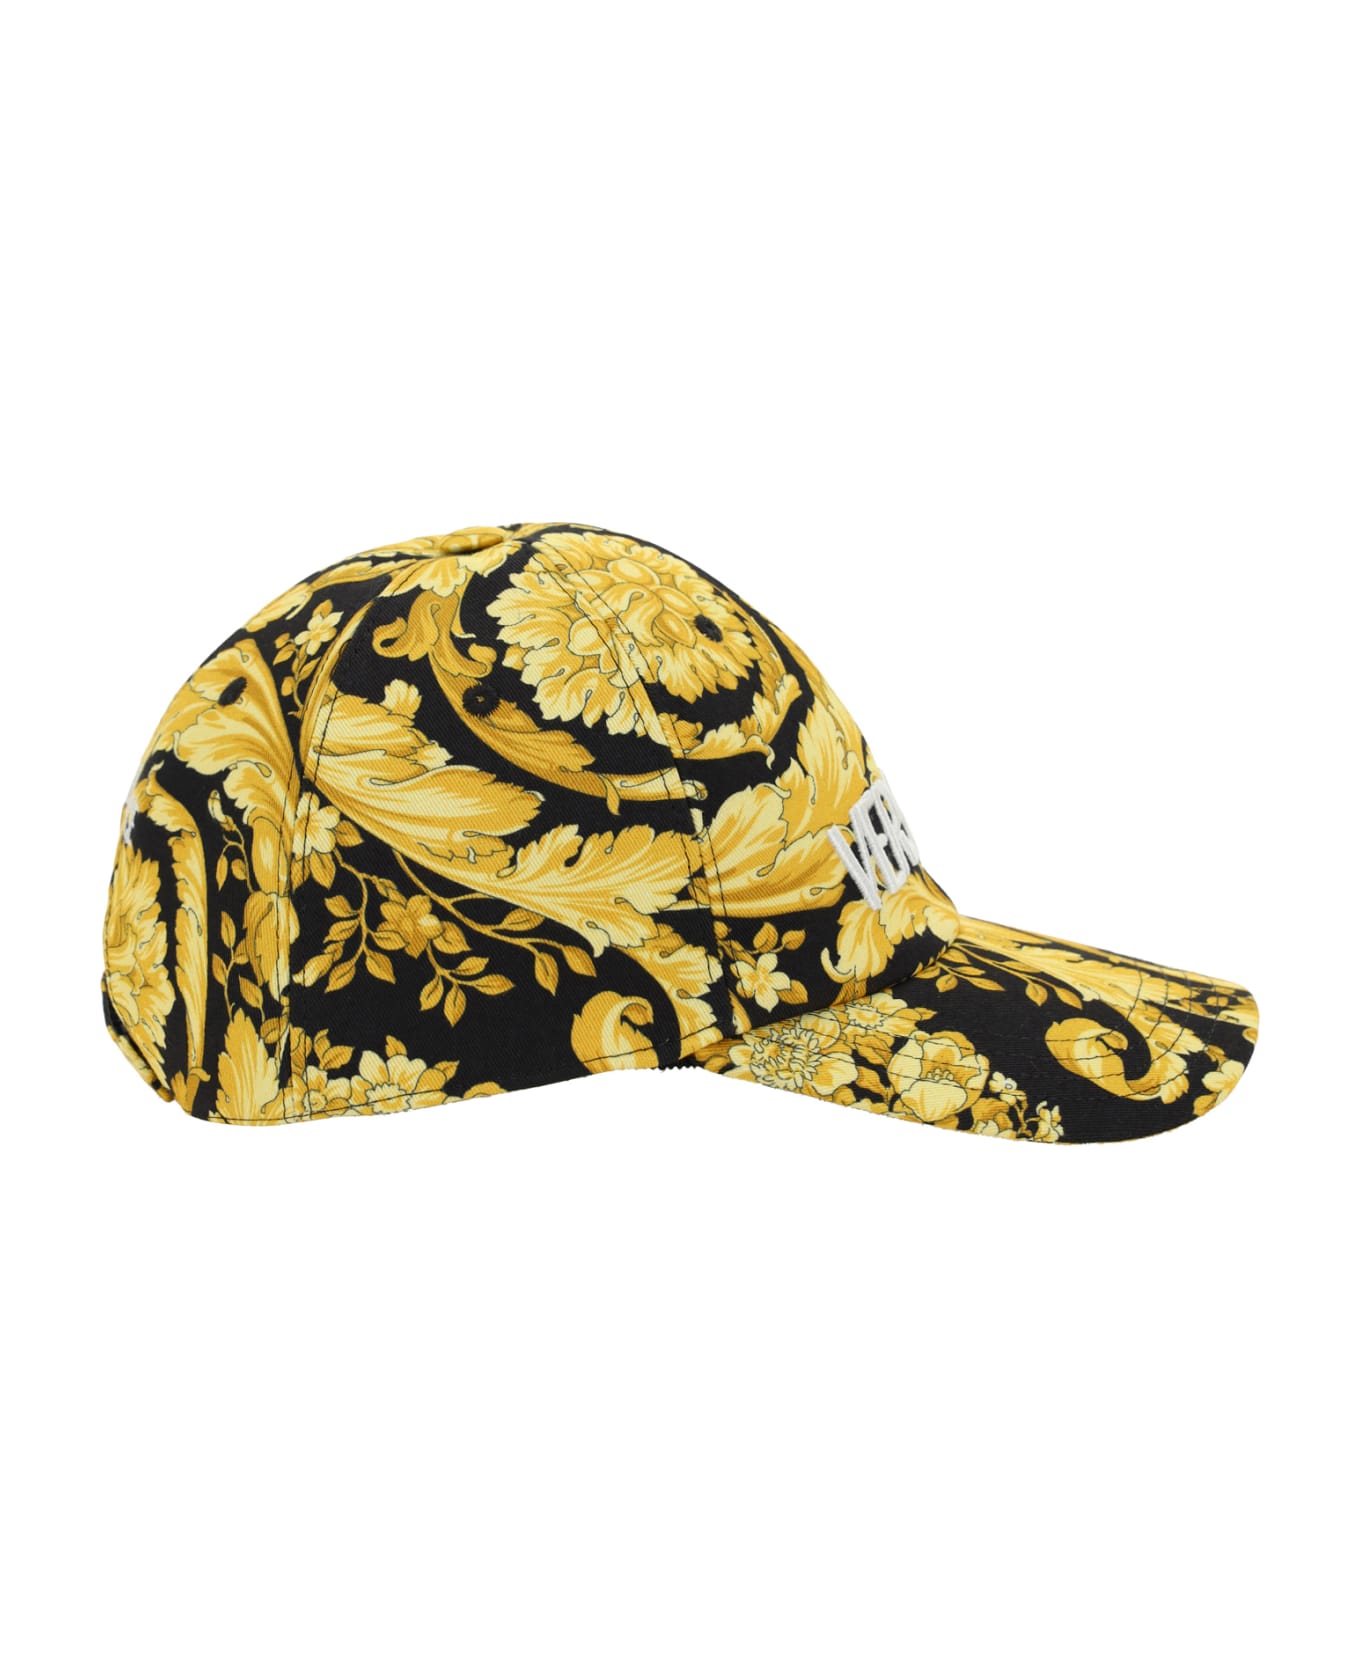 Versace Baseball Cap - Black/gold/black